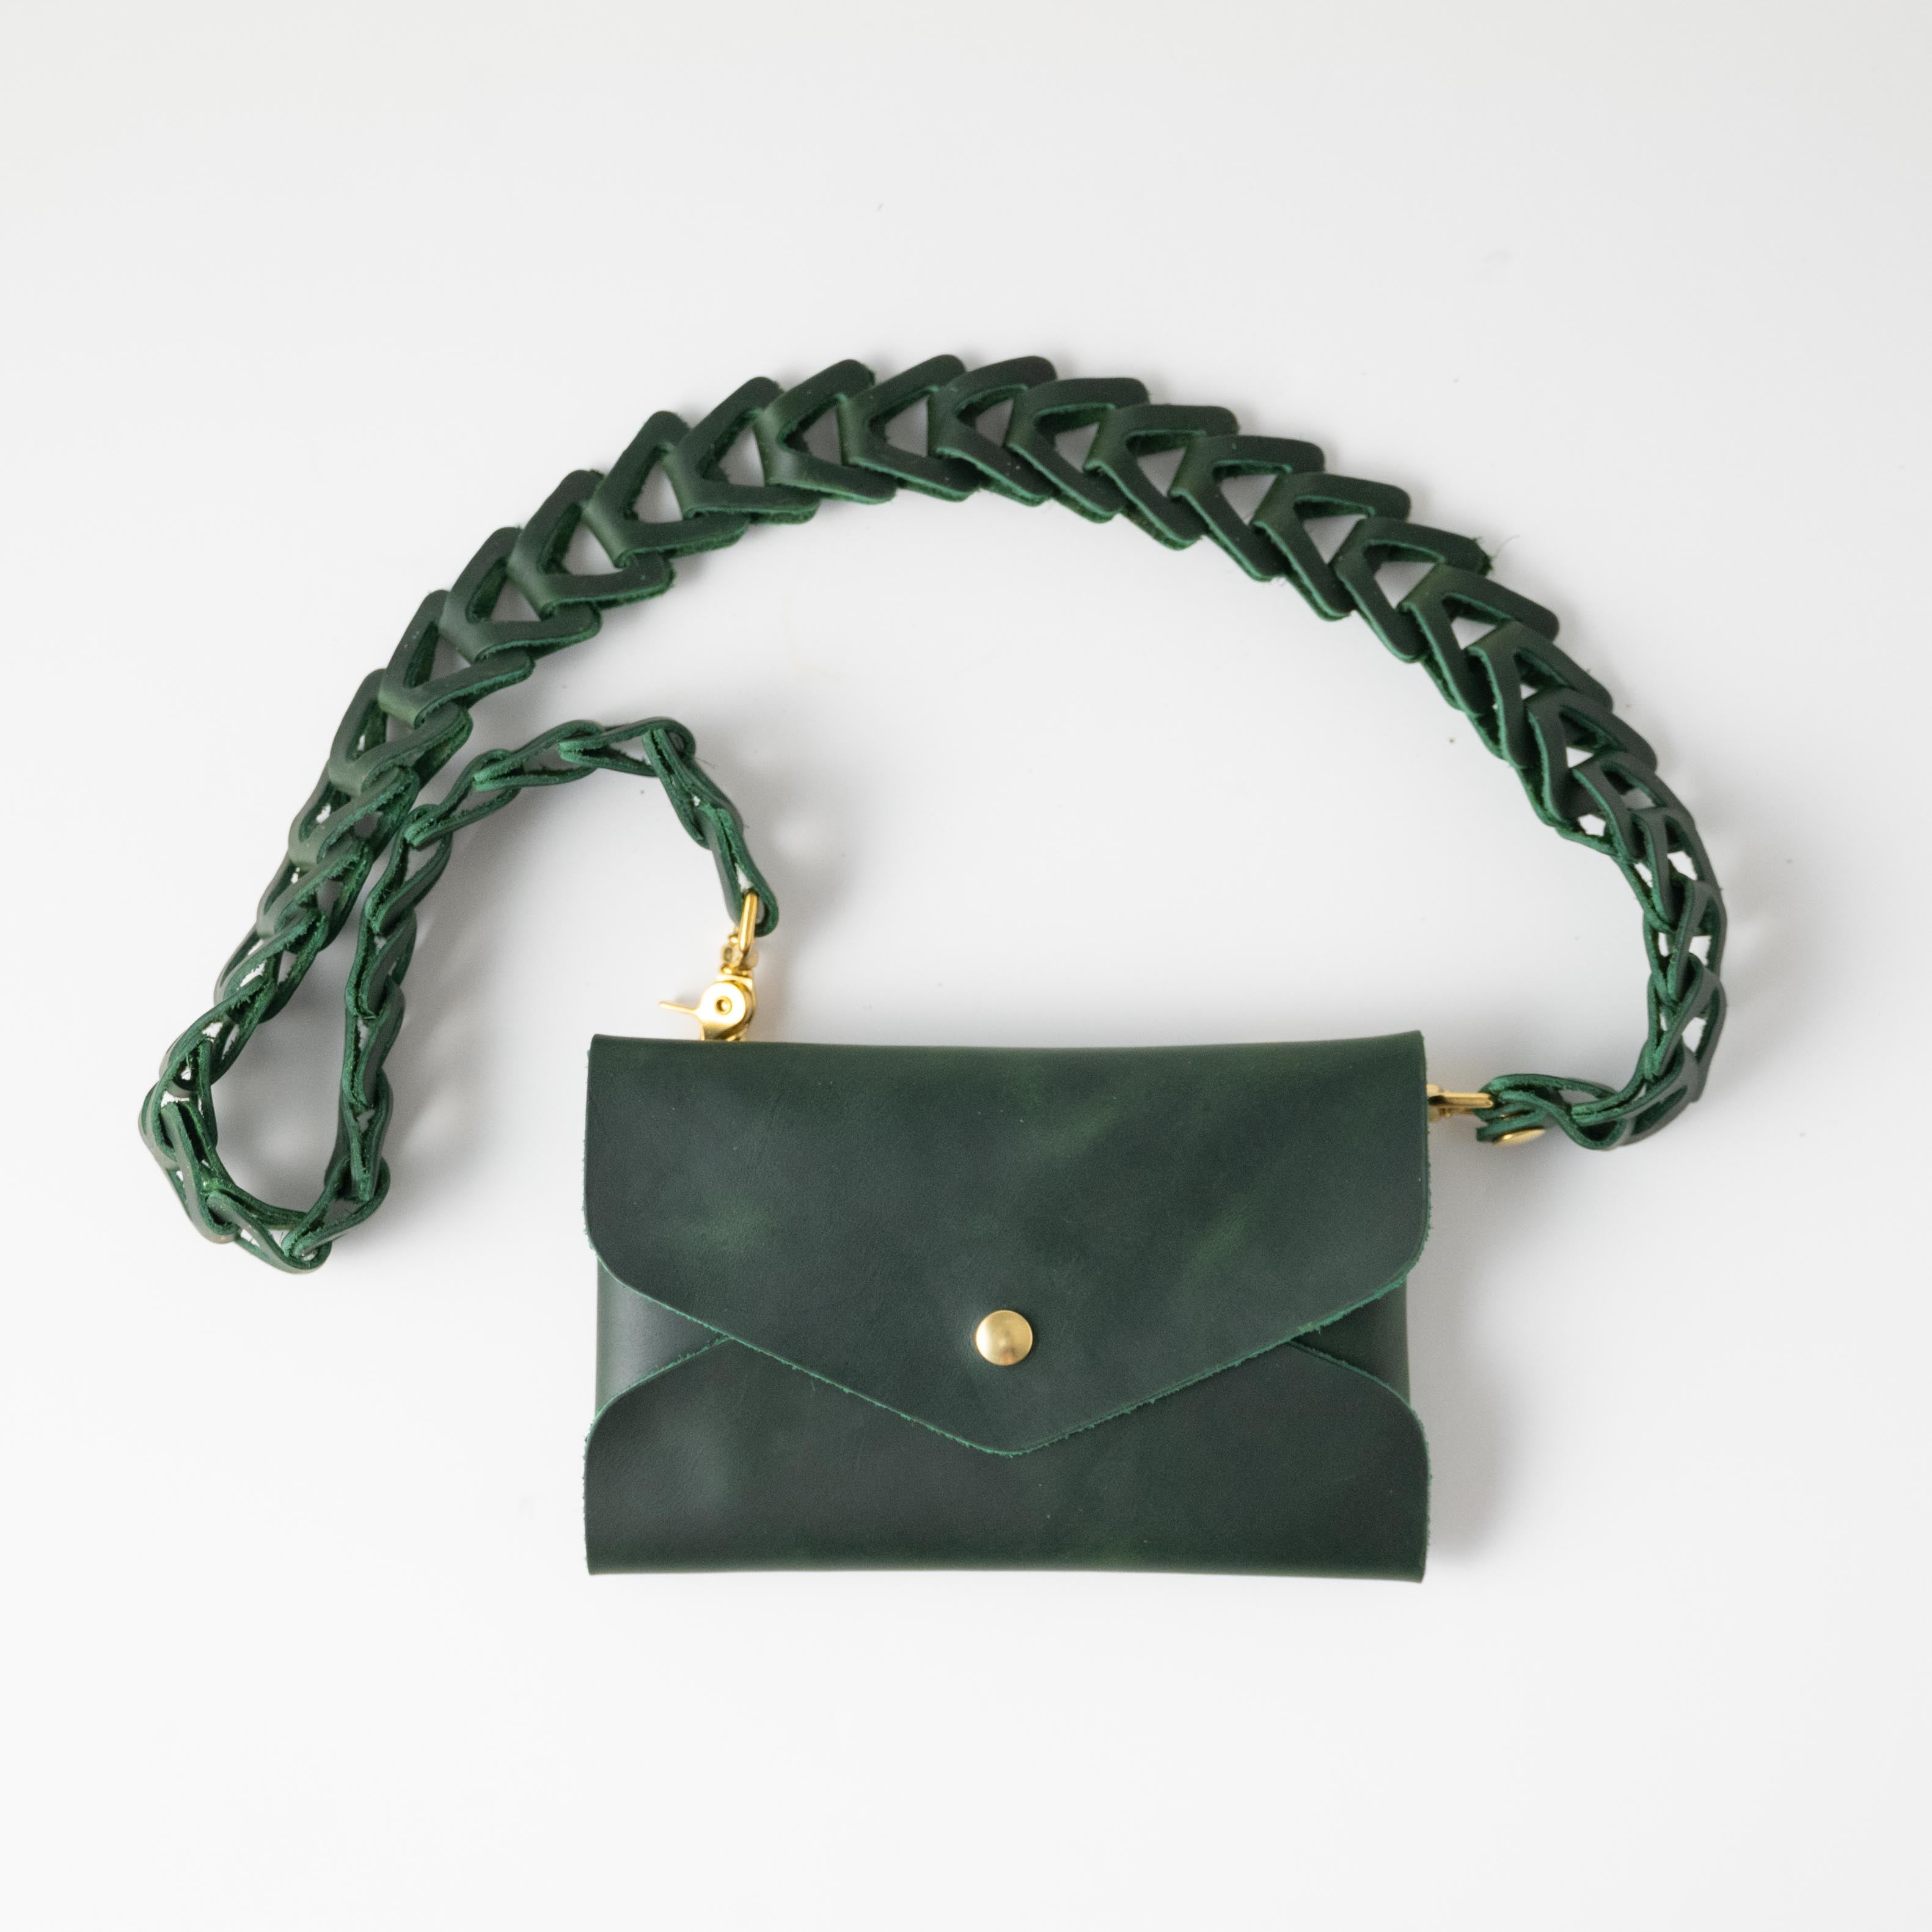 Navy Kodiak Envelope Clutch- leather clutch bag - handmade leather bags - KMM &amp; Co.